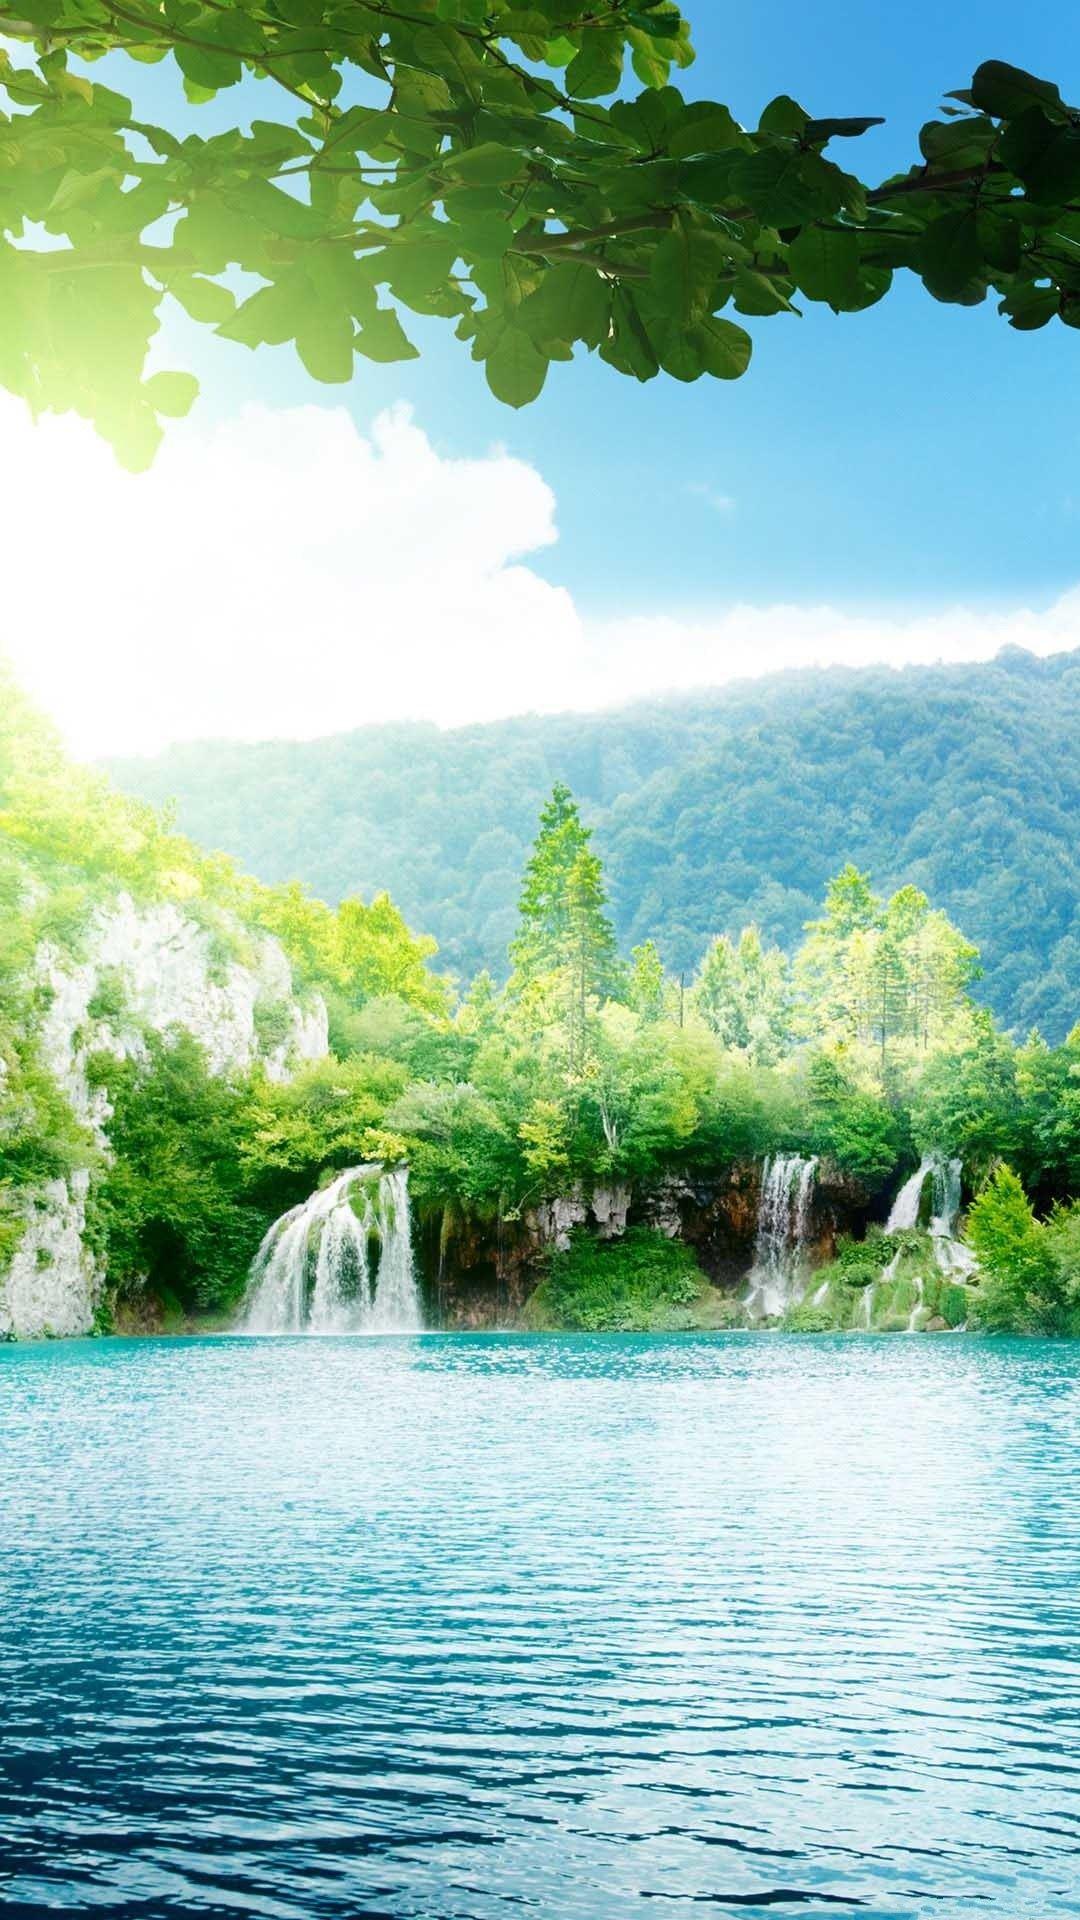 Enchanting Lake Waterfalls Blue Sky Android Wallpaper free download